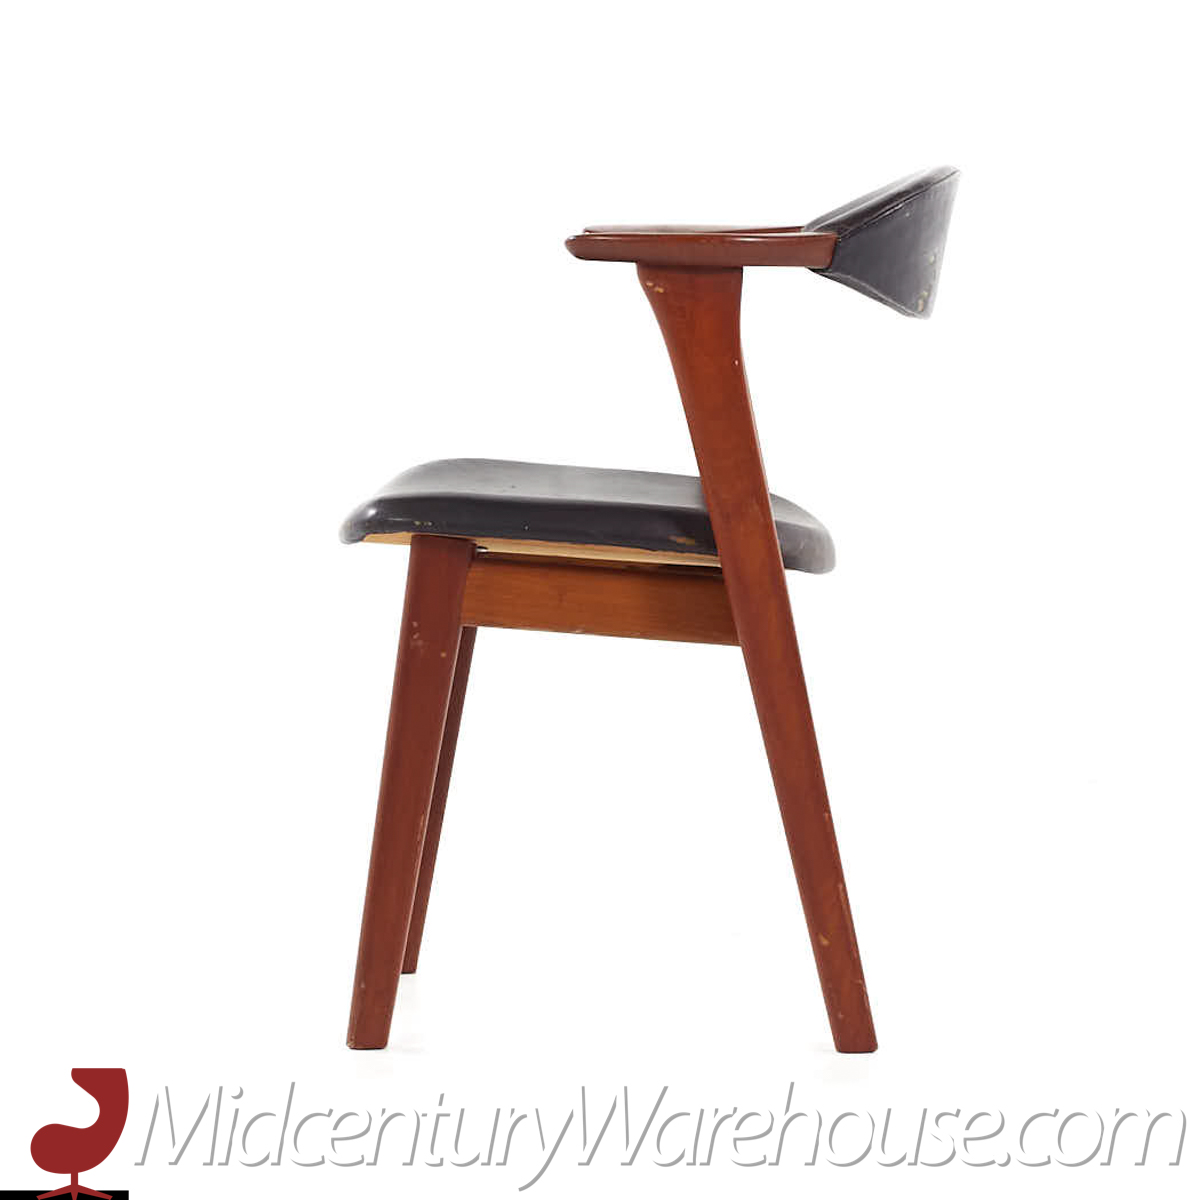 Moreddi Style Mid Century Danish Dining Chairs - Set of 6